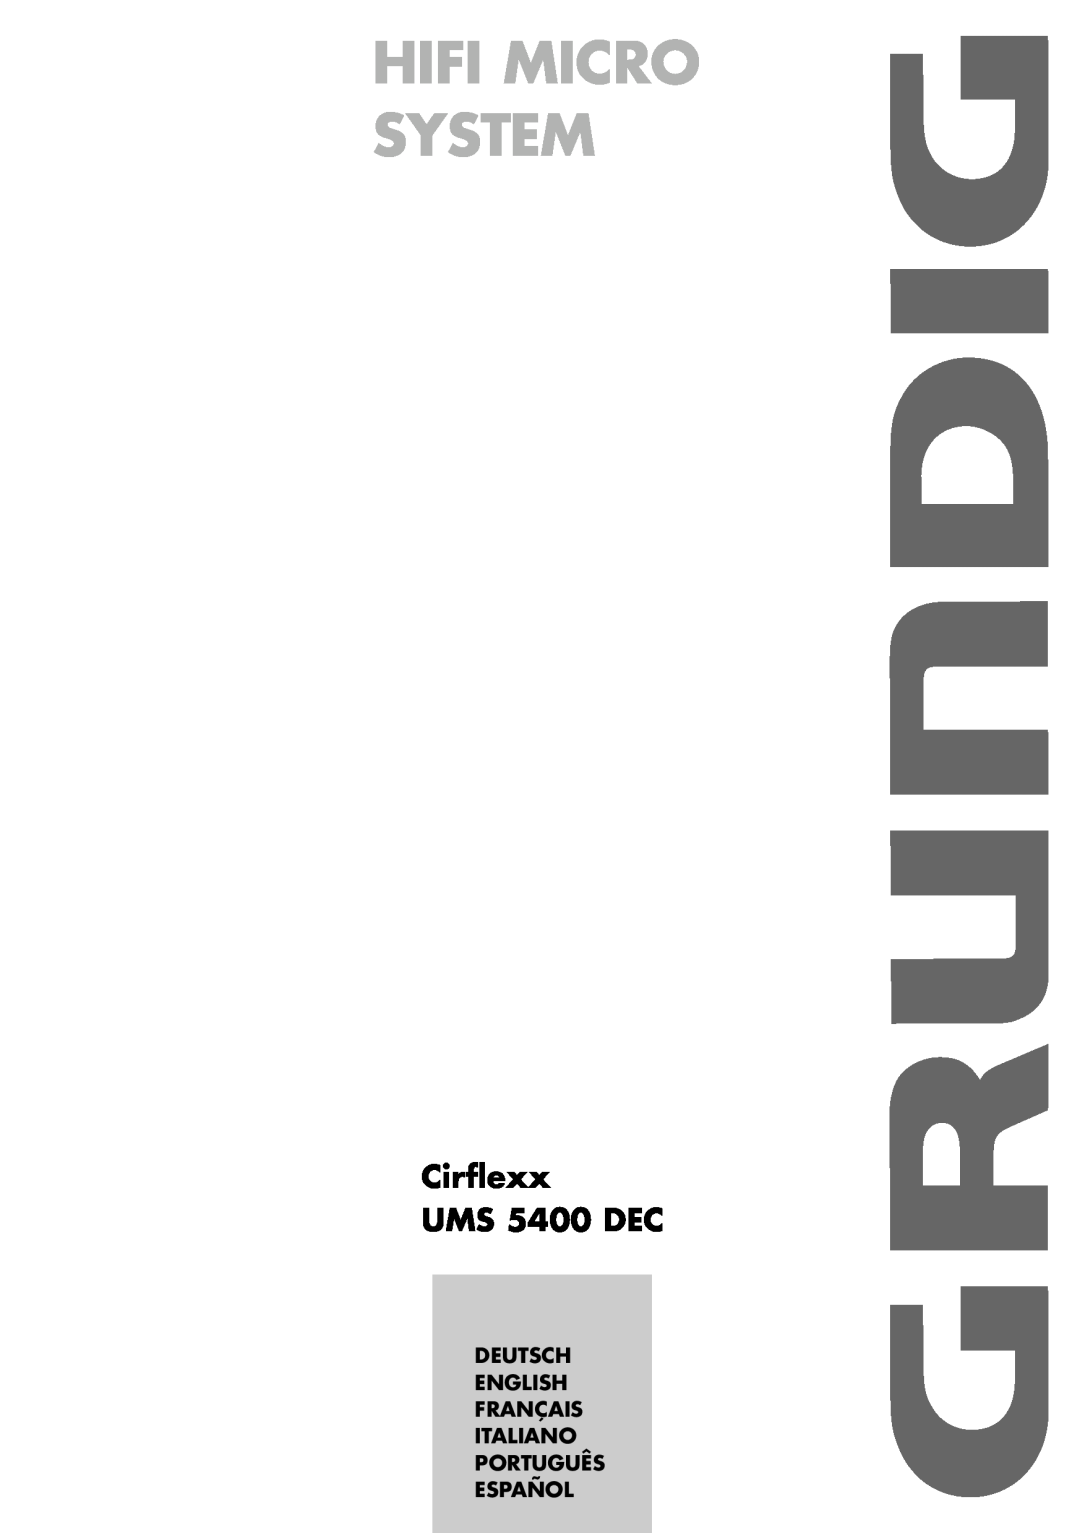 Grundig manual Hifi Micro System, Cirflexx UMS 5400 DEC, Deutsch English Français Italiano Português, Español 